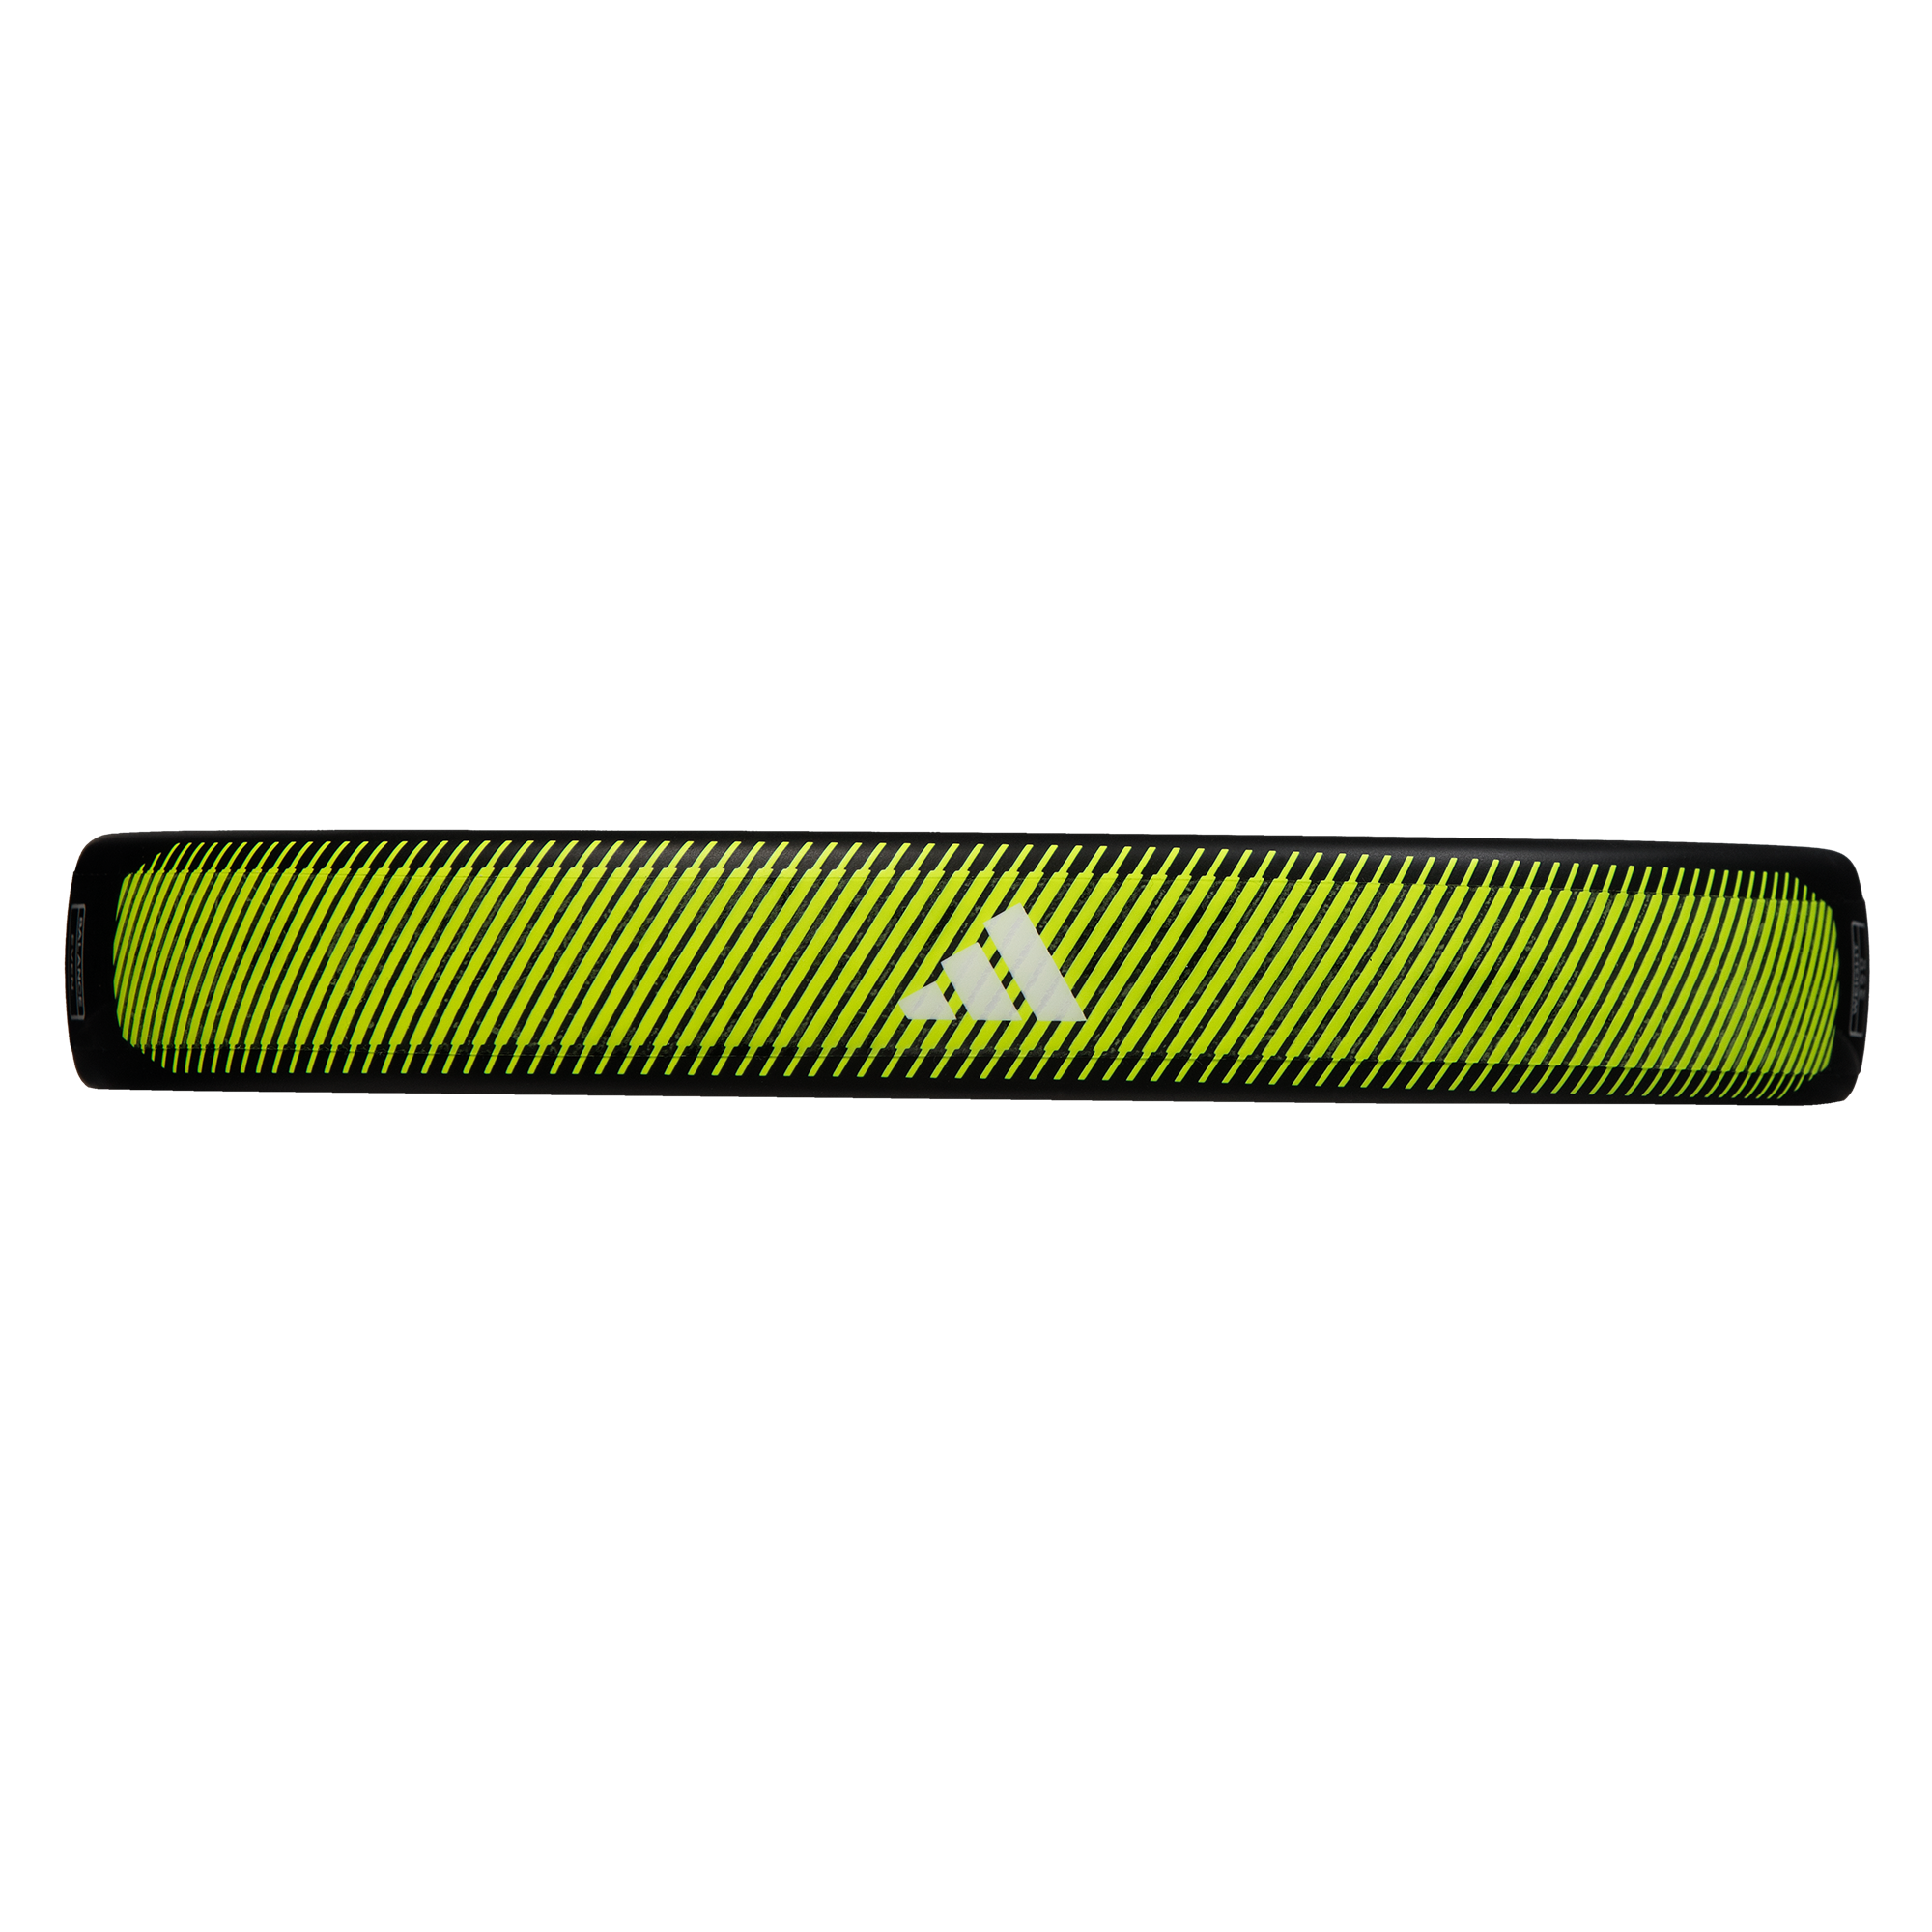 Adidas Rx Series Lime (2024)